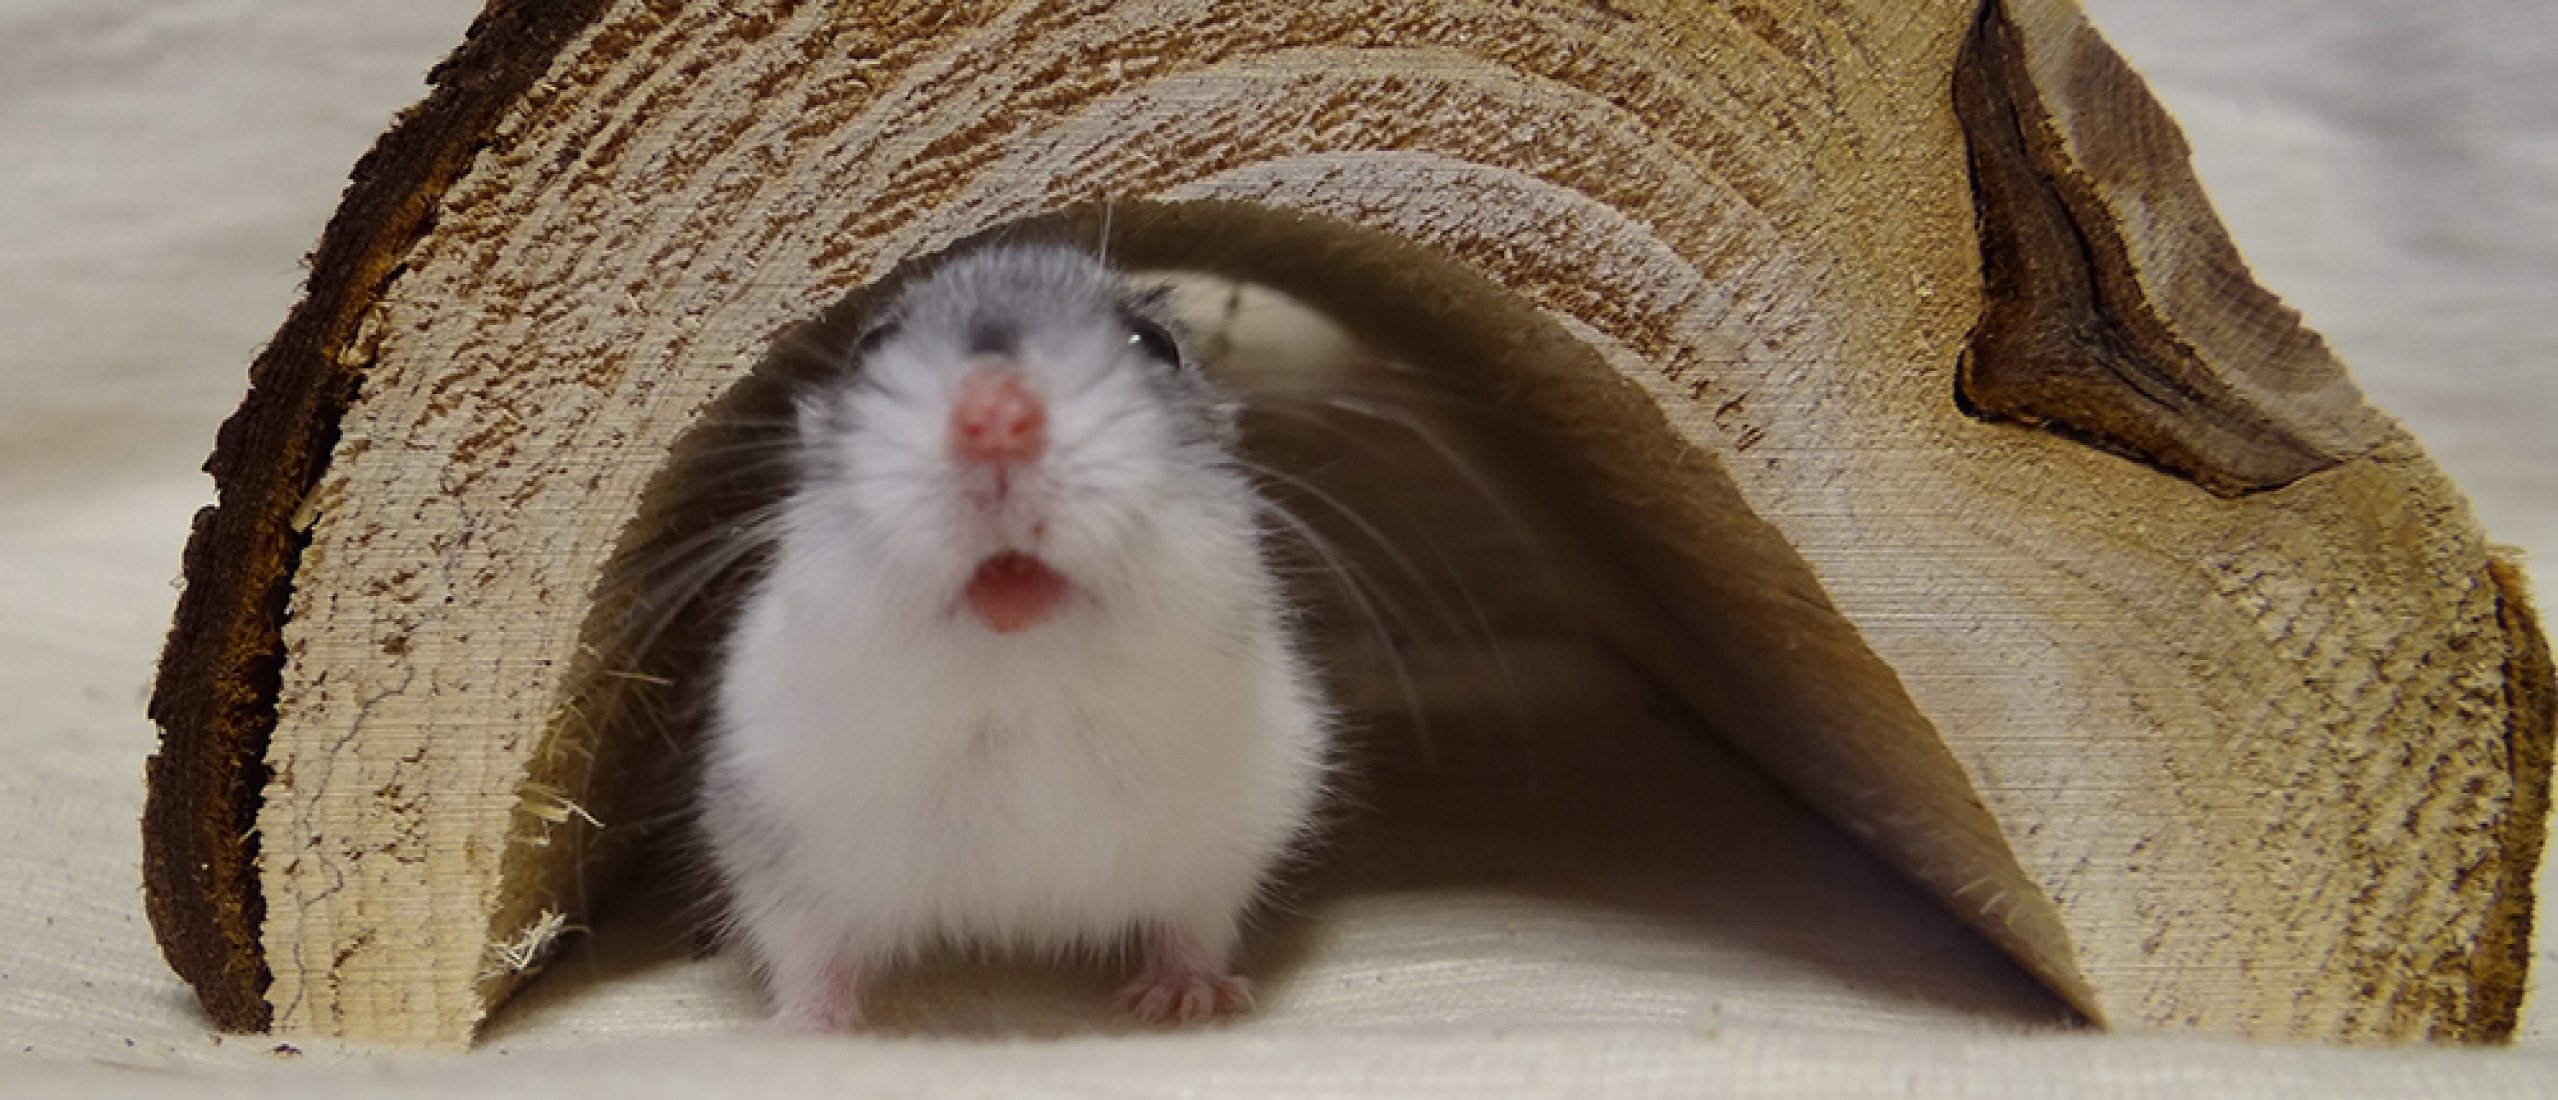 Waarom slapen hamsters vaak overdag?